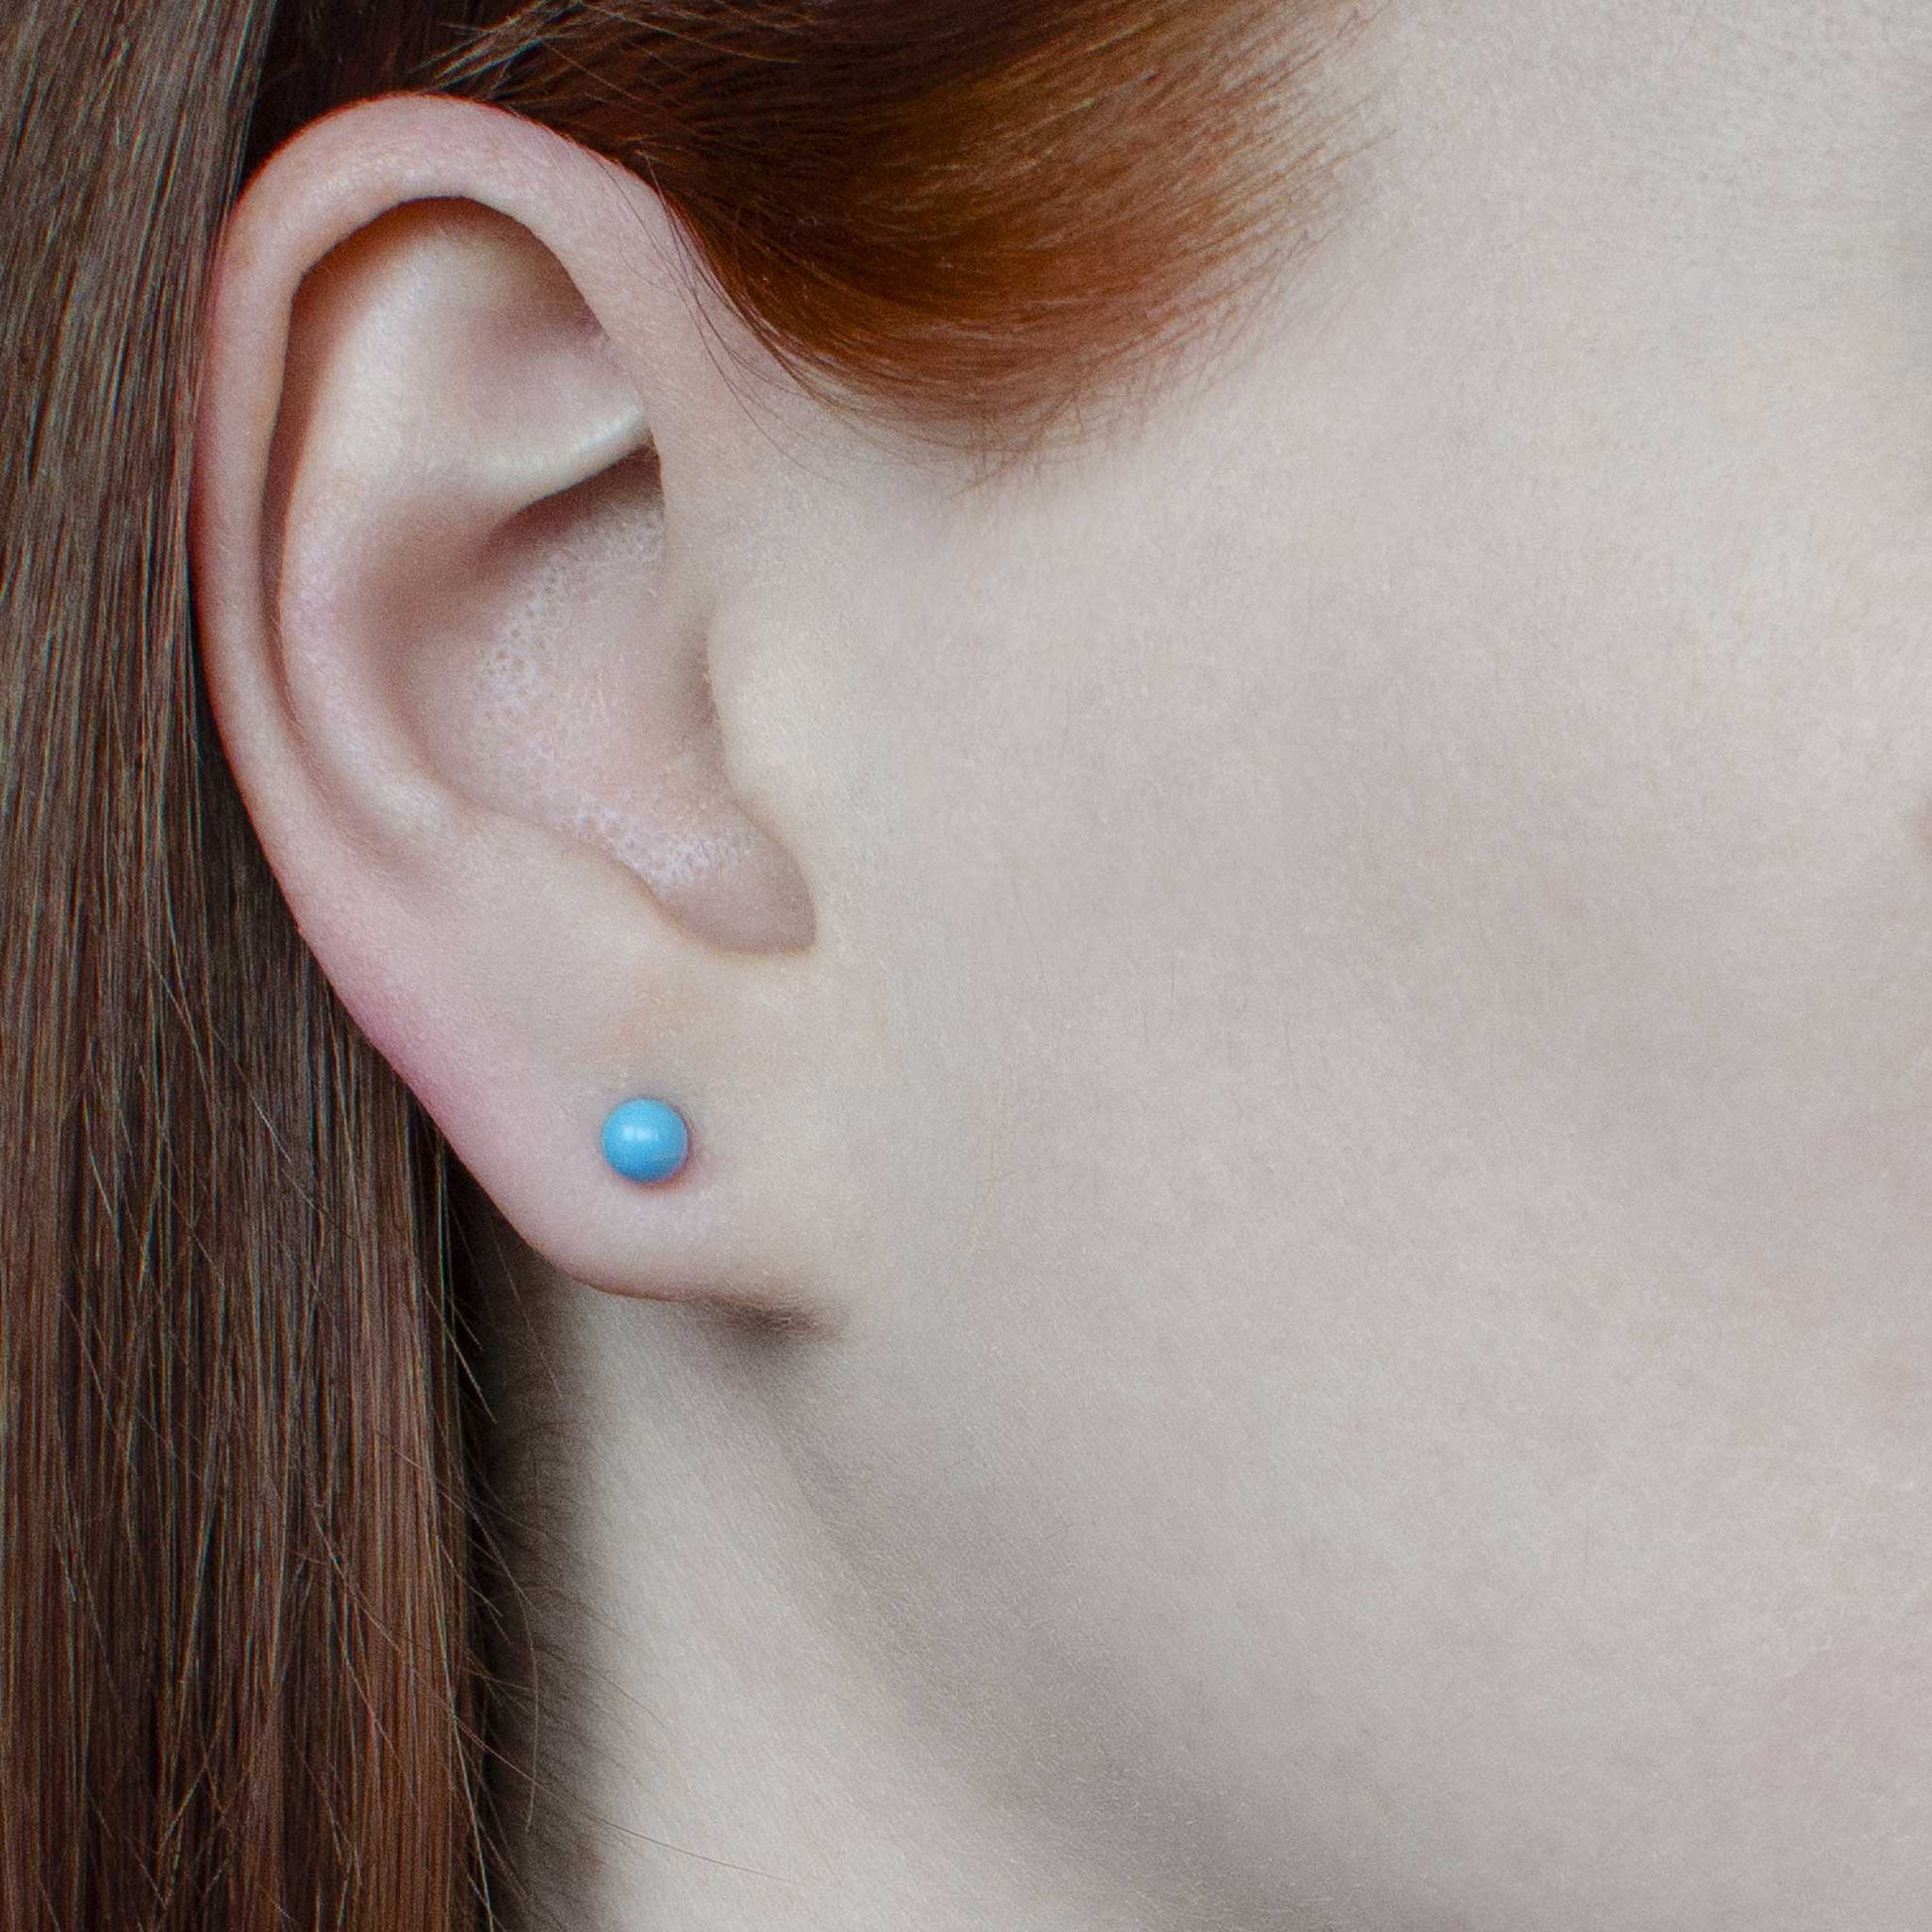 Woman wearing small Turquoise single stud earring in earlobe